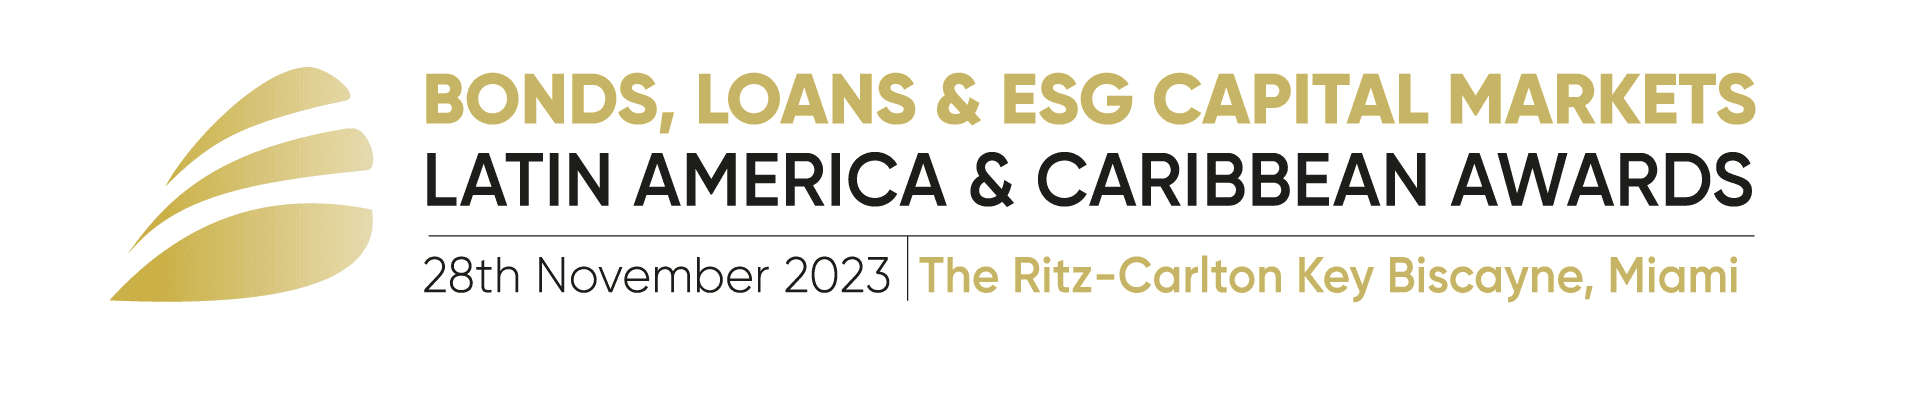 Bonds & Loans Latin America & Caribbean AWARDS 2023